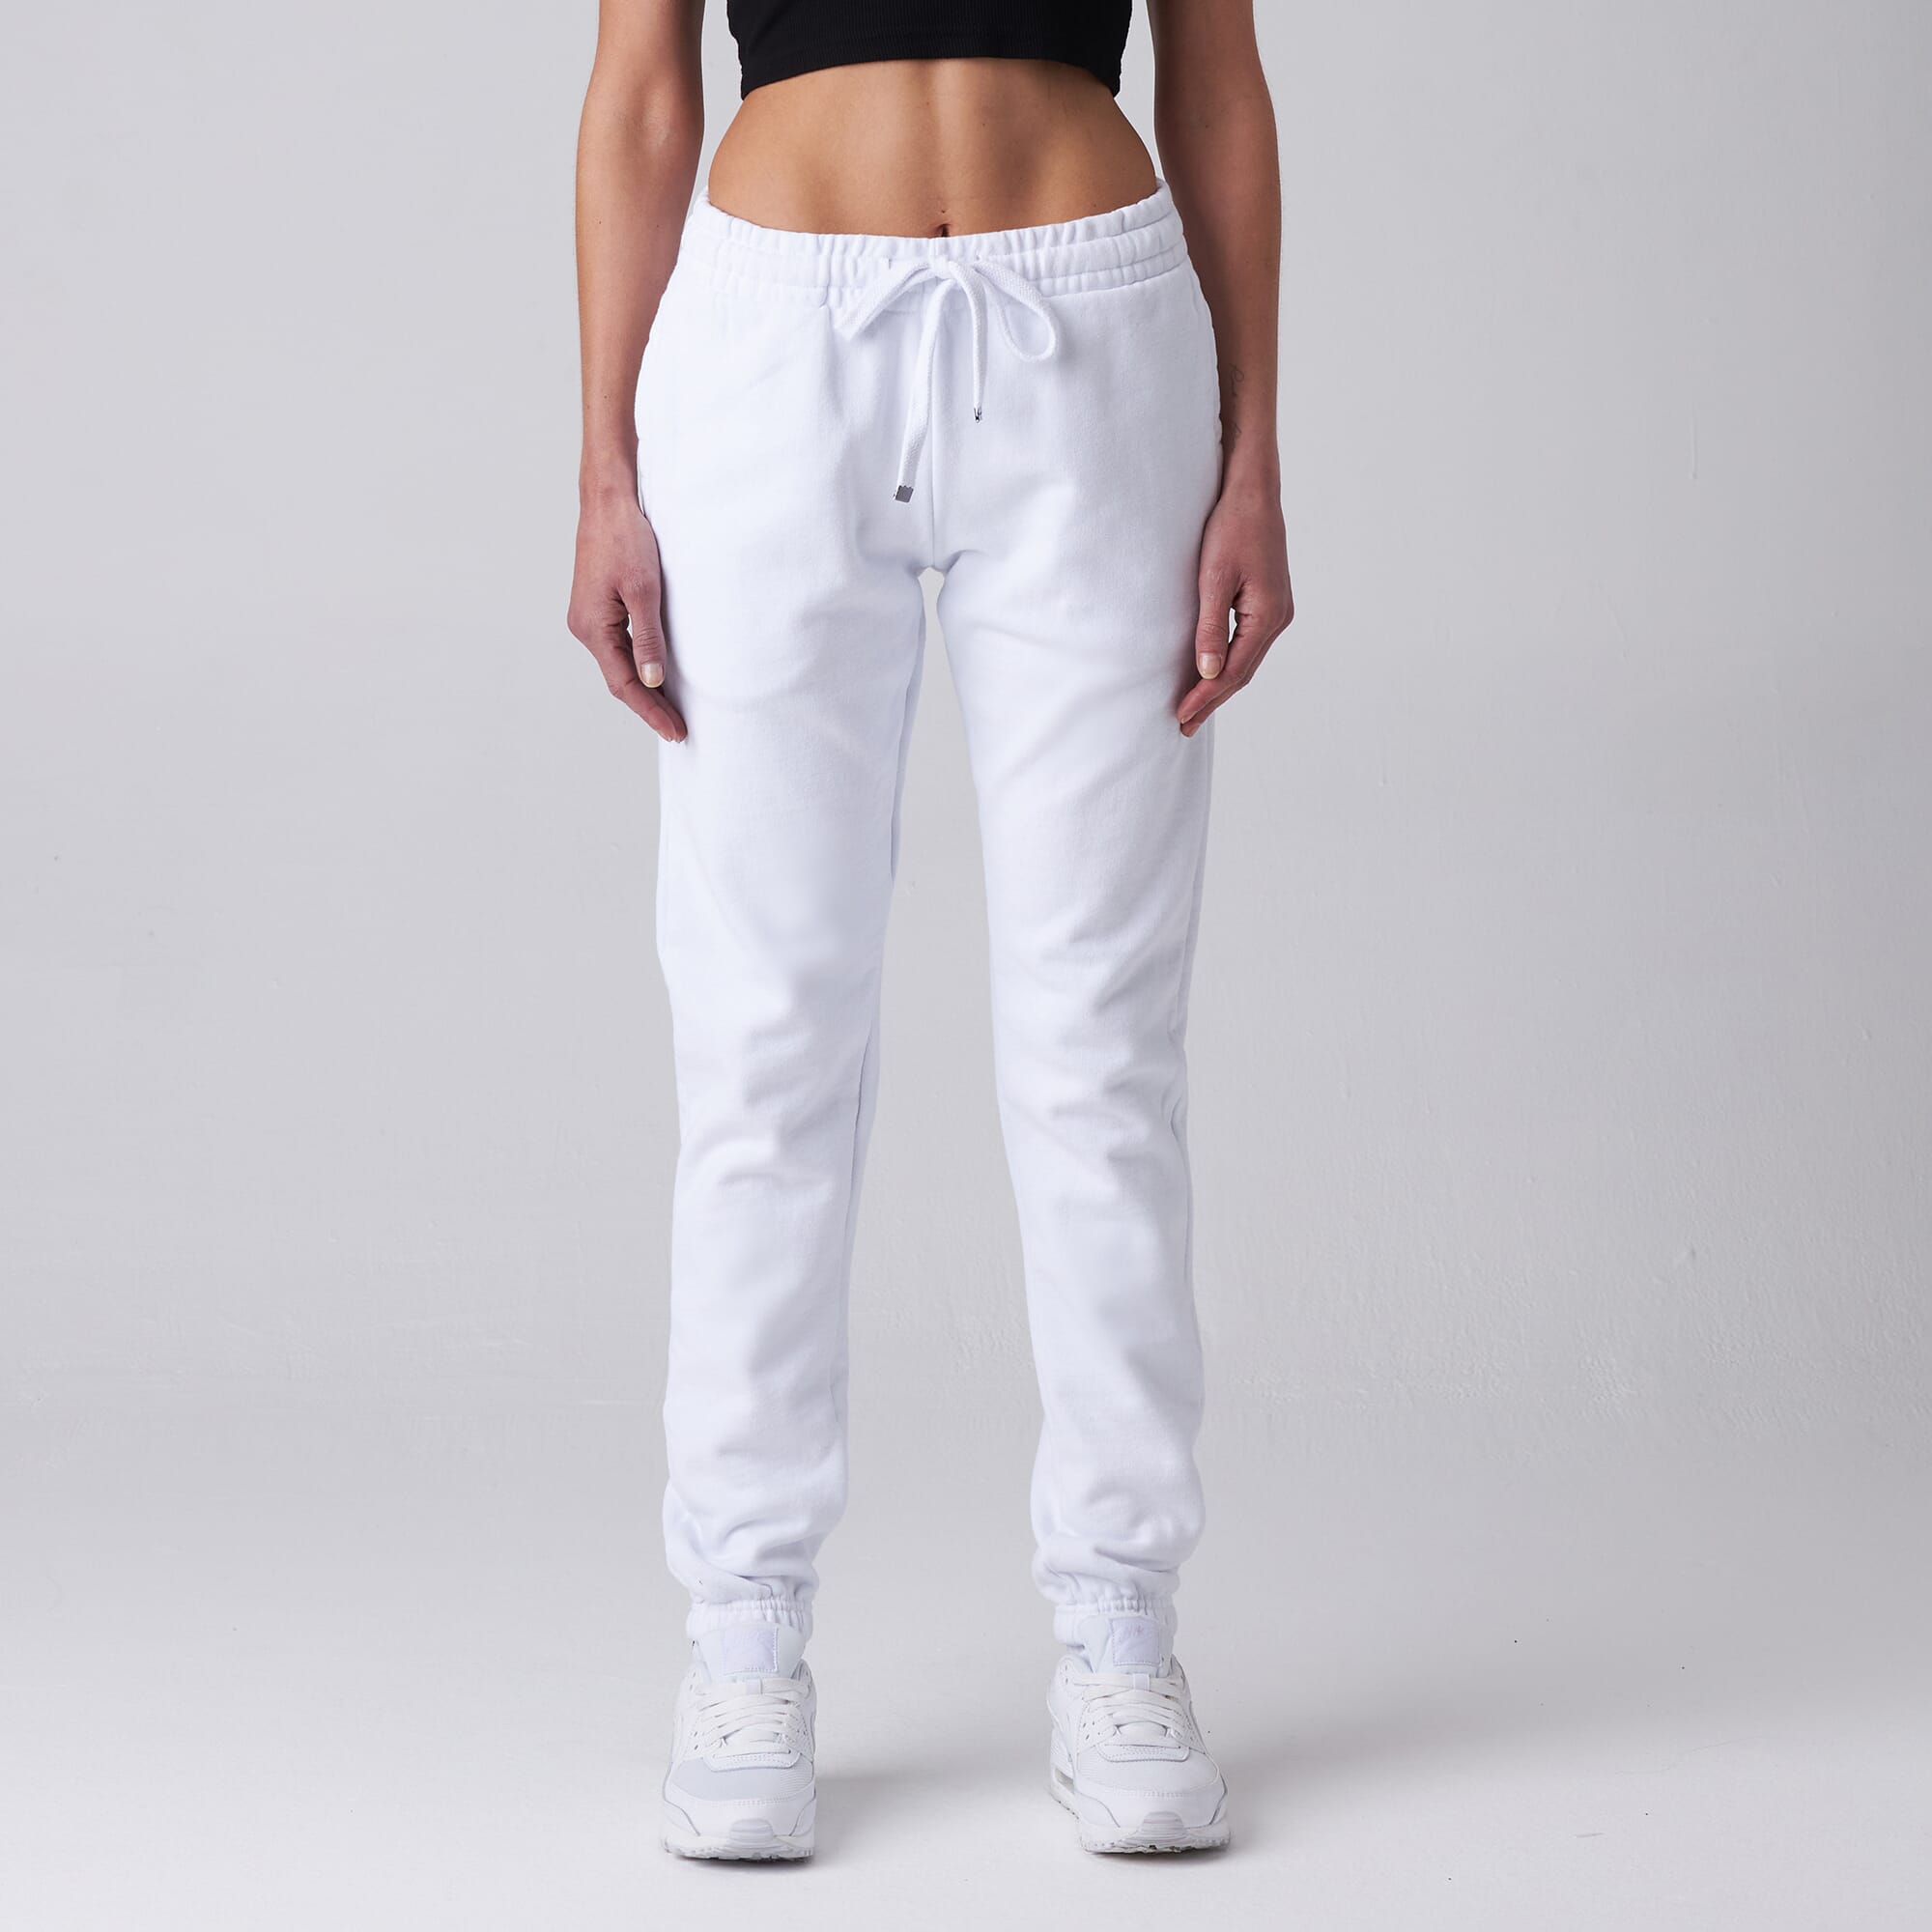 White sweatpants Girls Power